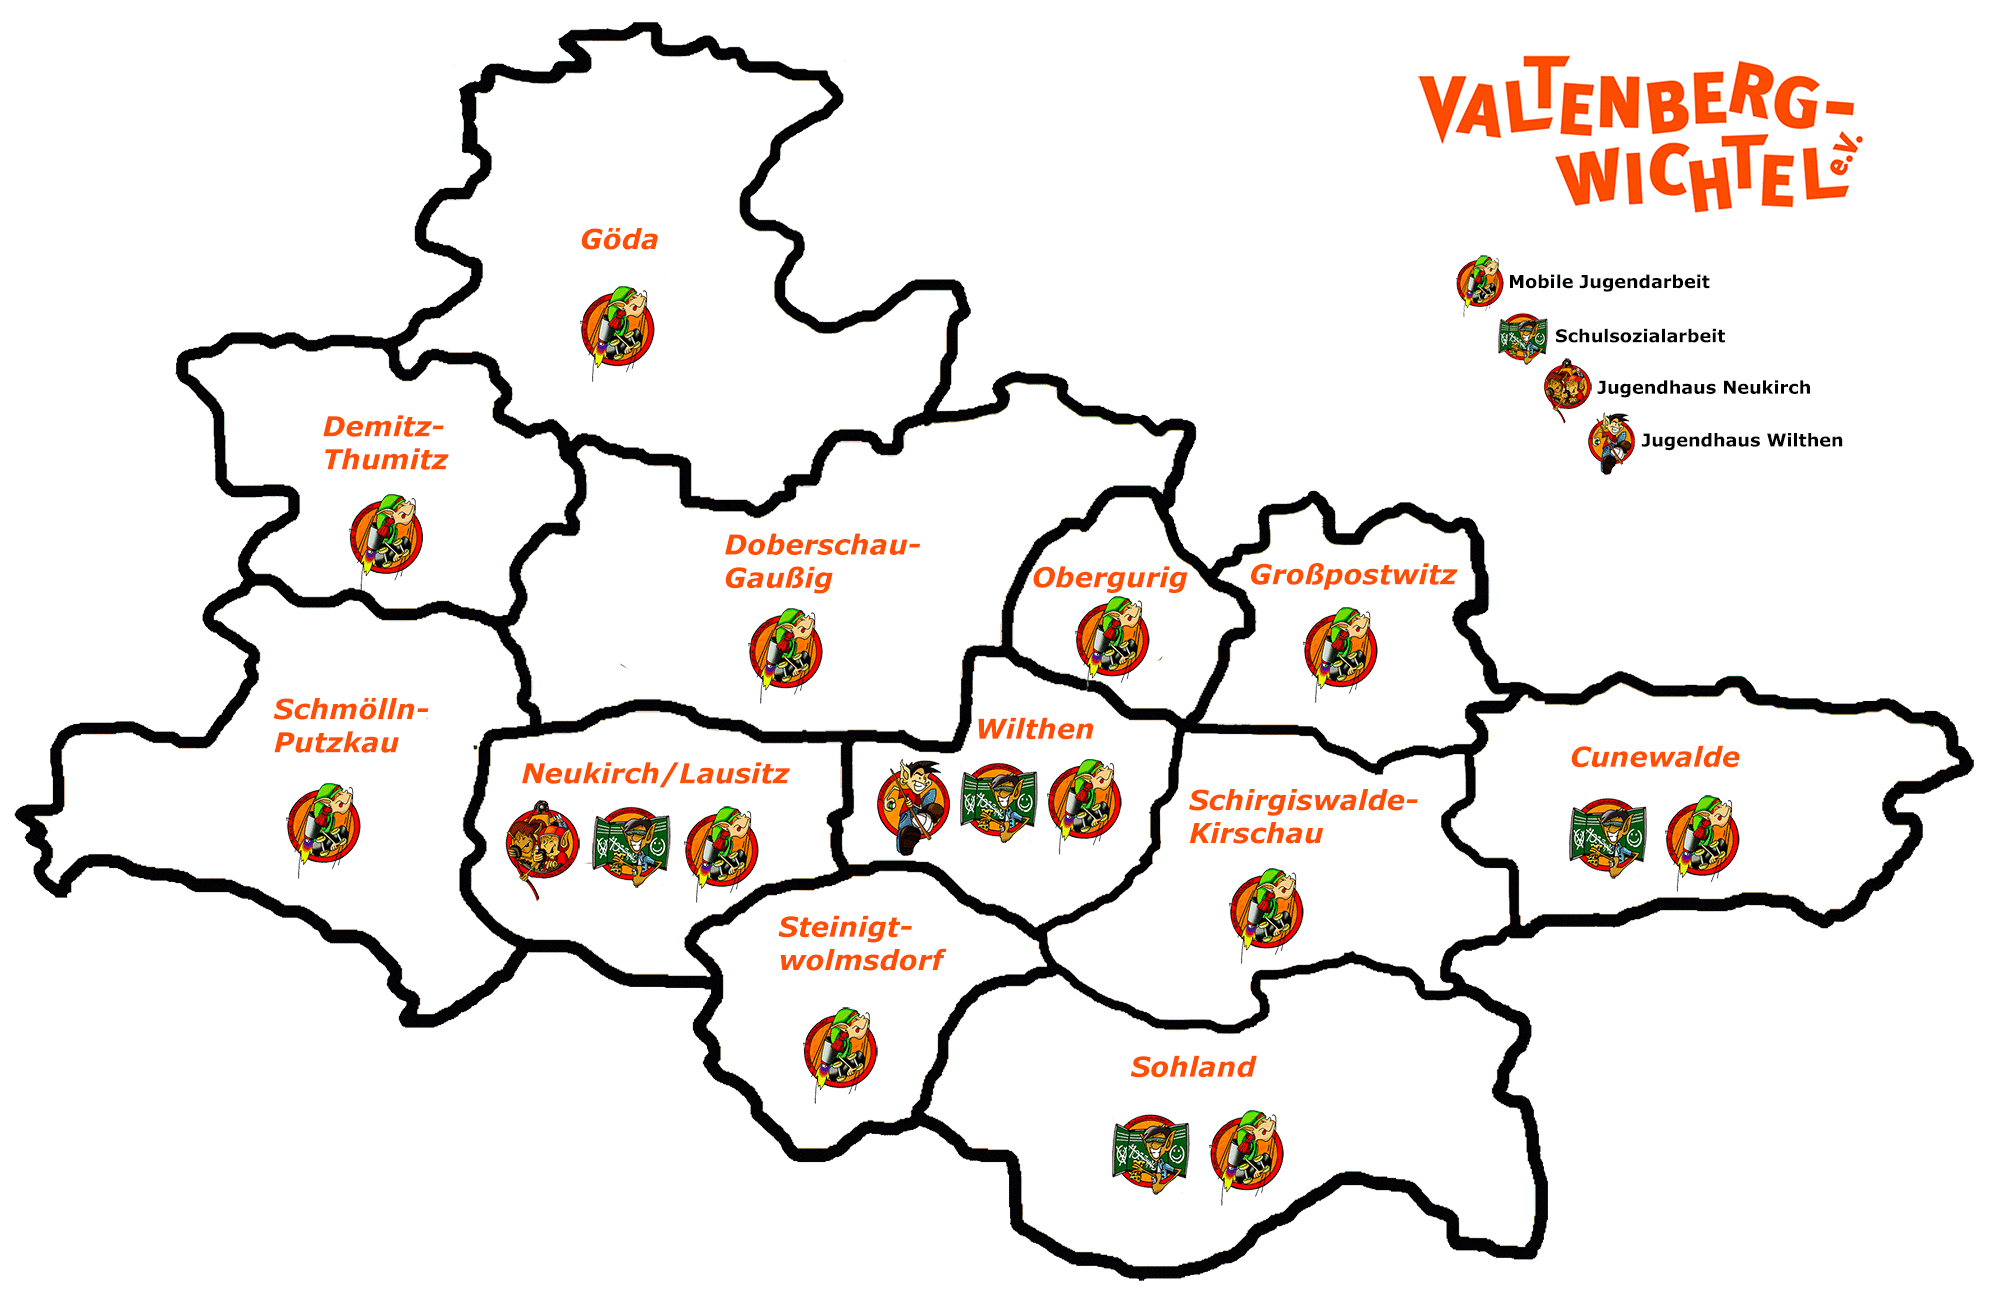 Map of Valtenbergwichtel departments